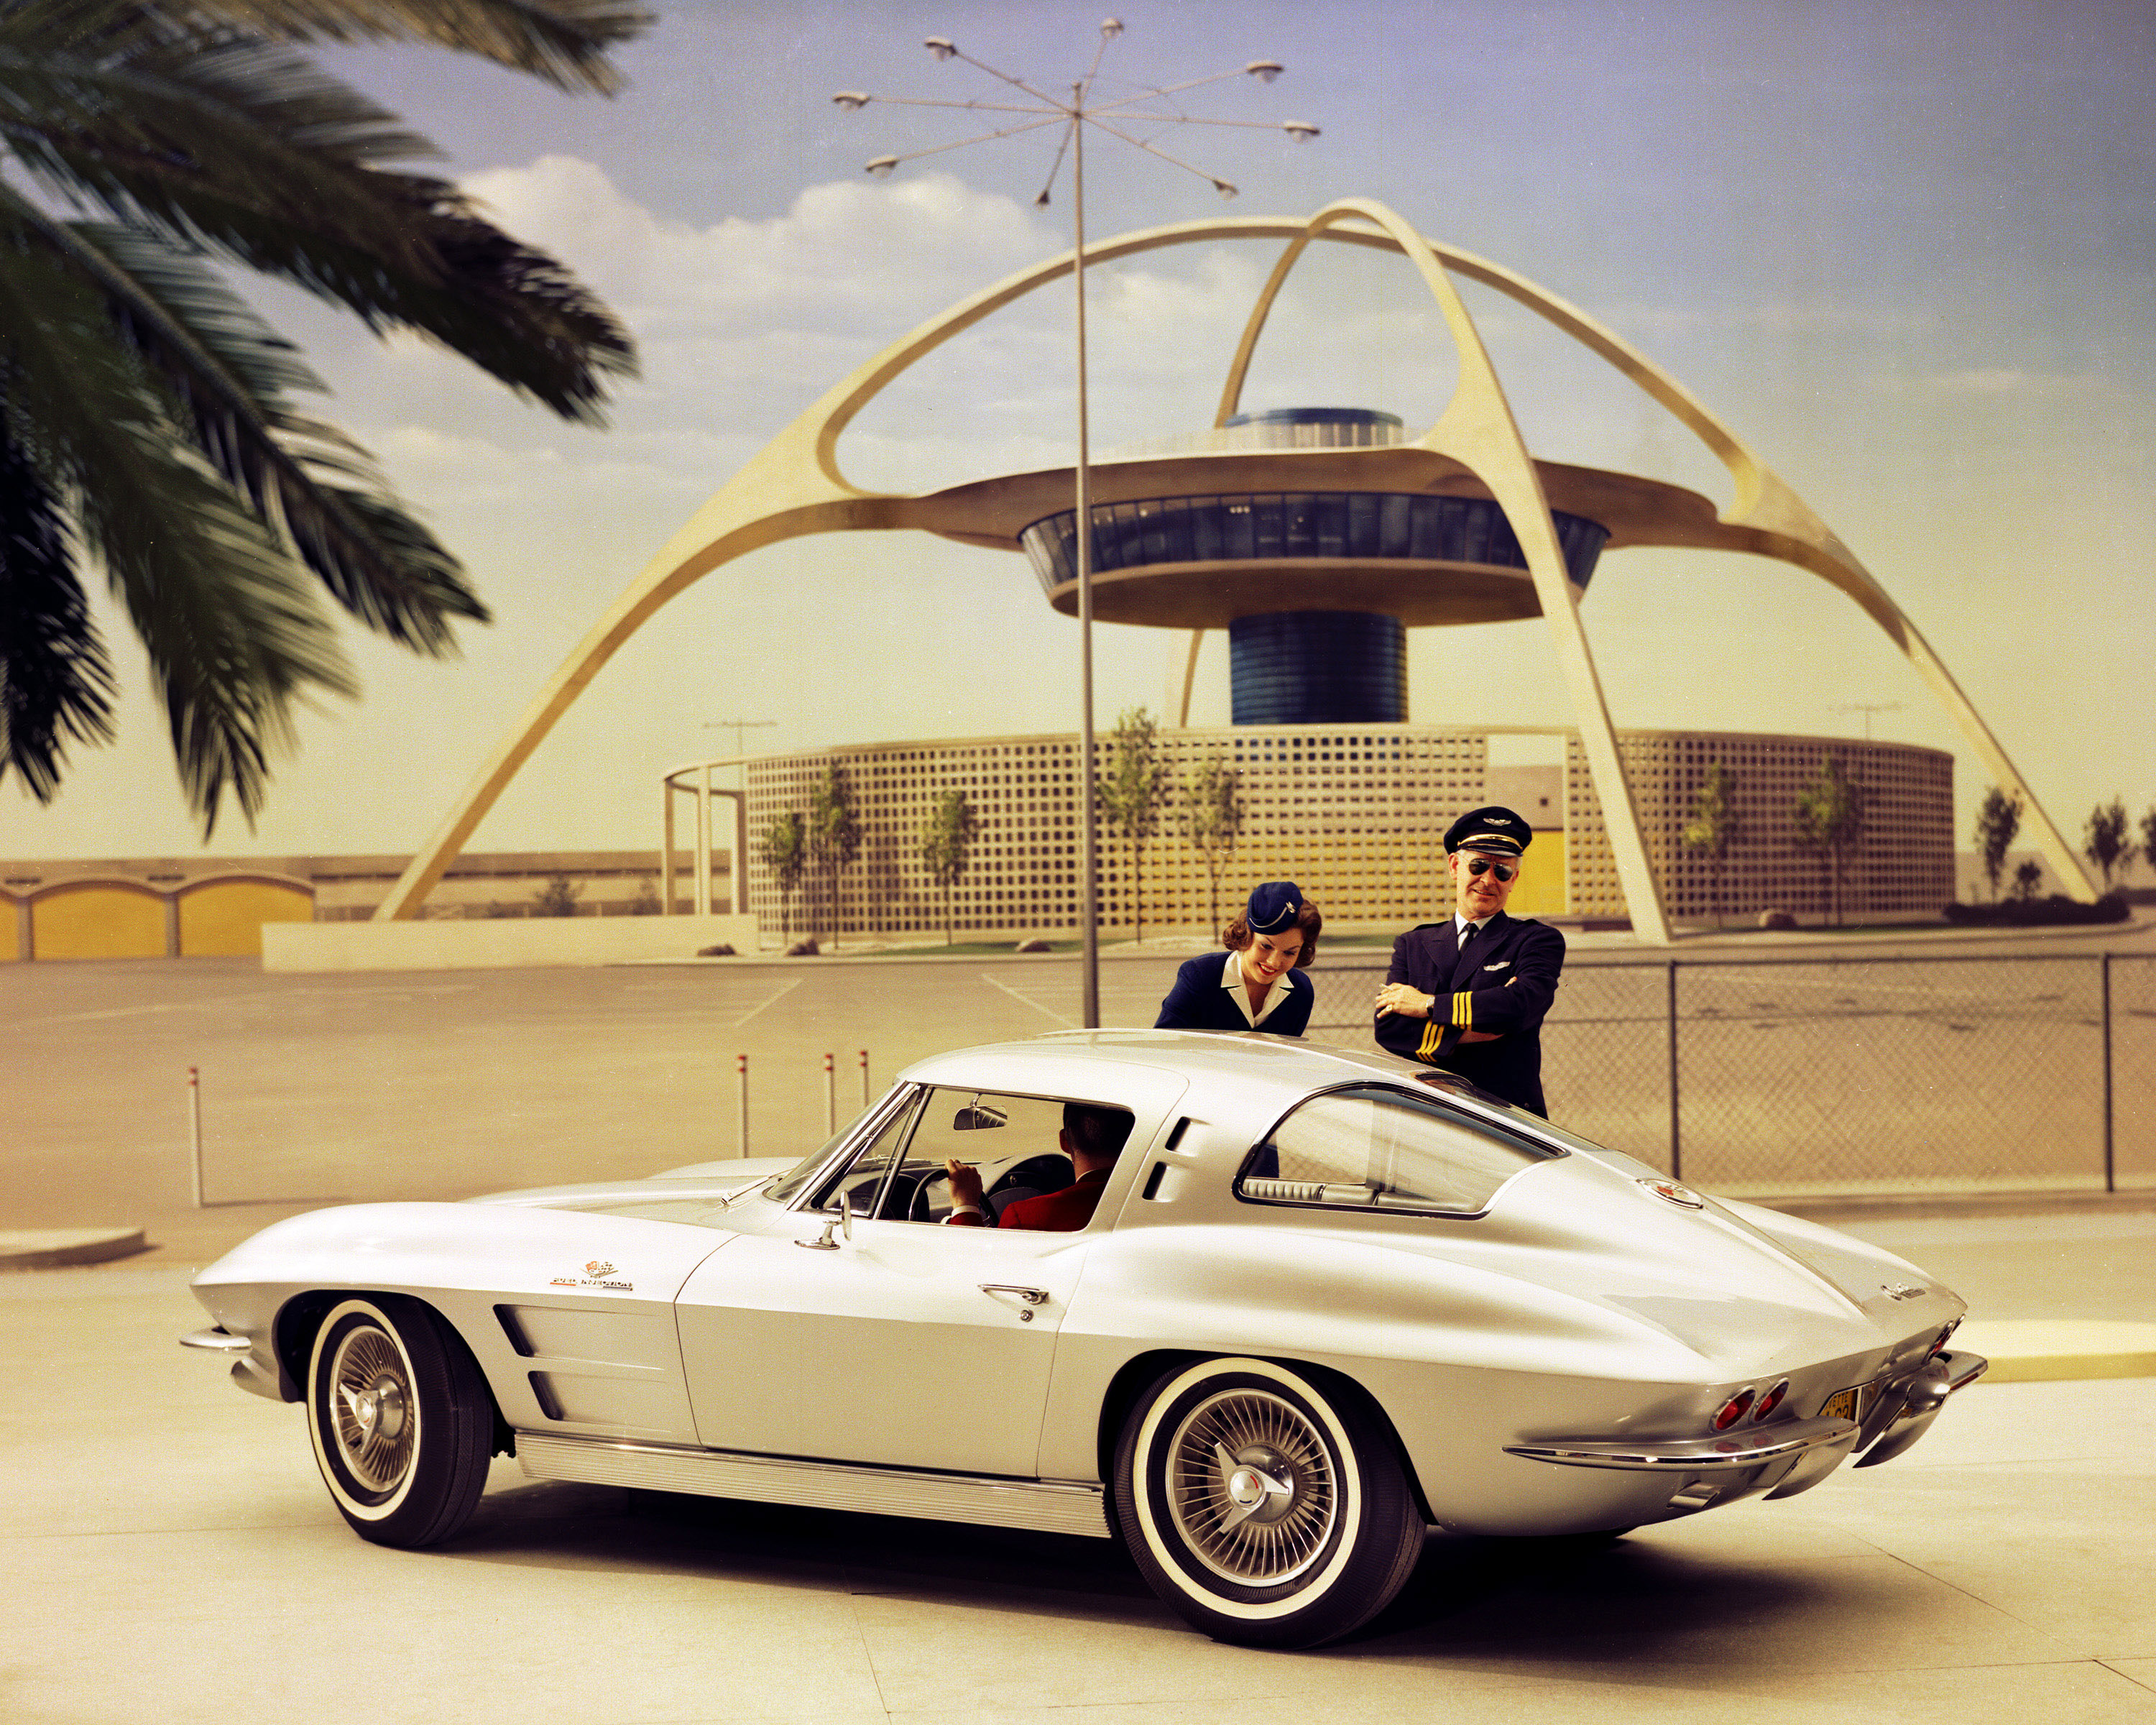 1963 Corvette Stingray advertisement.